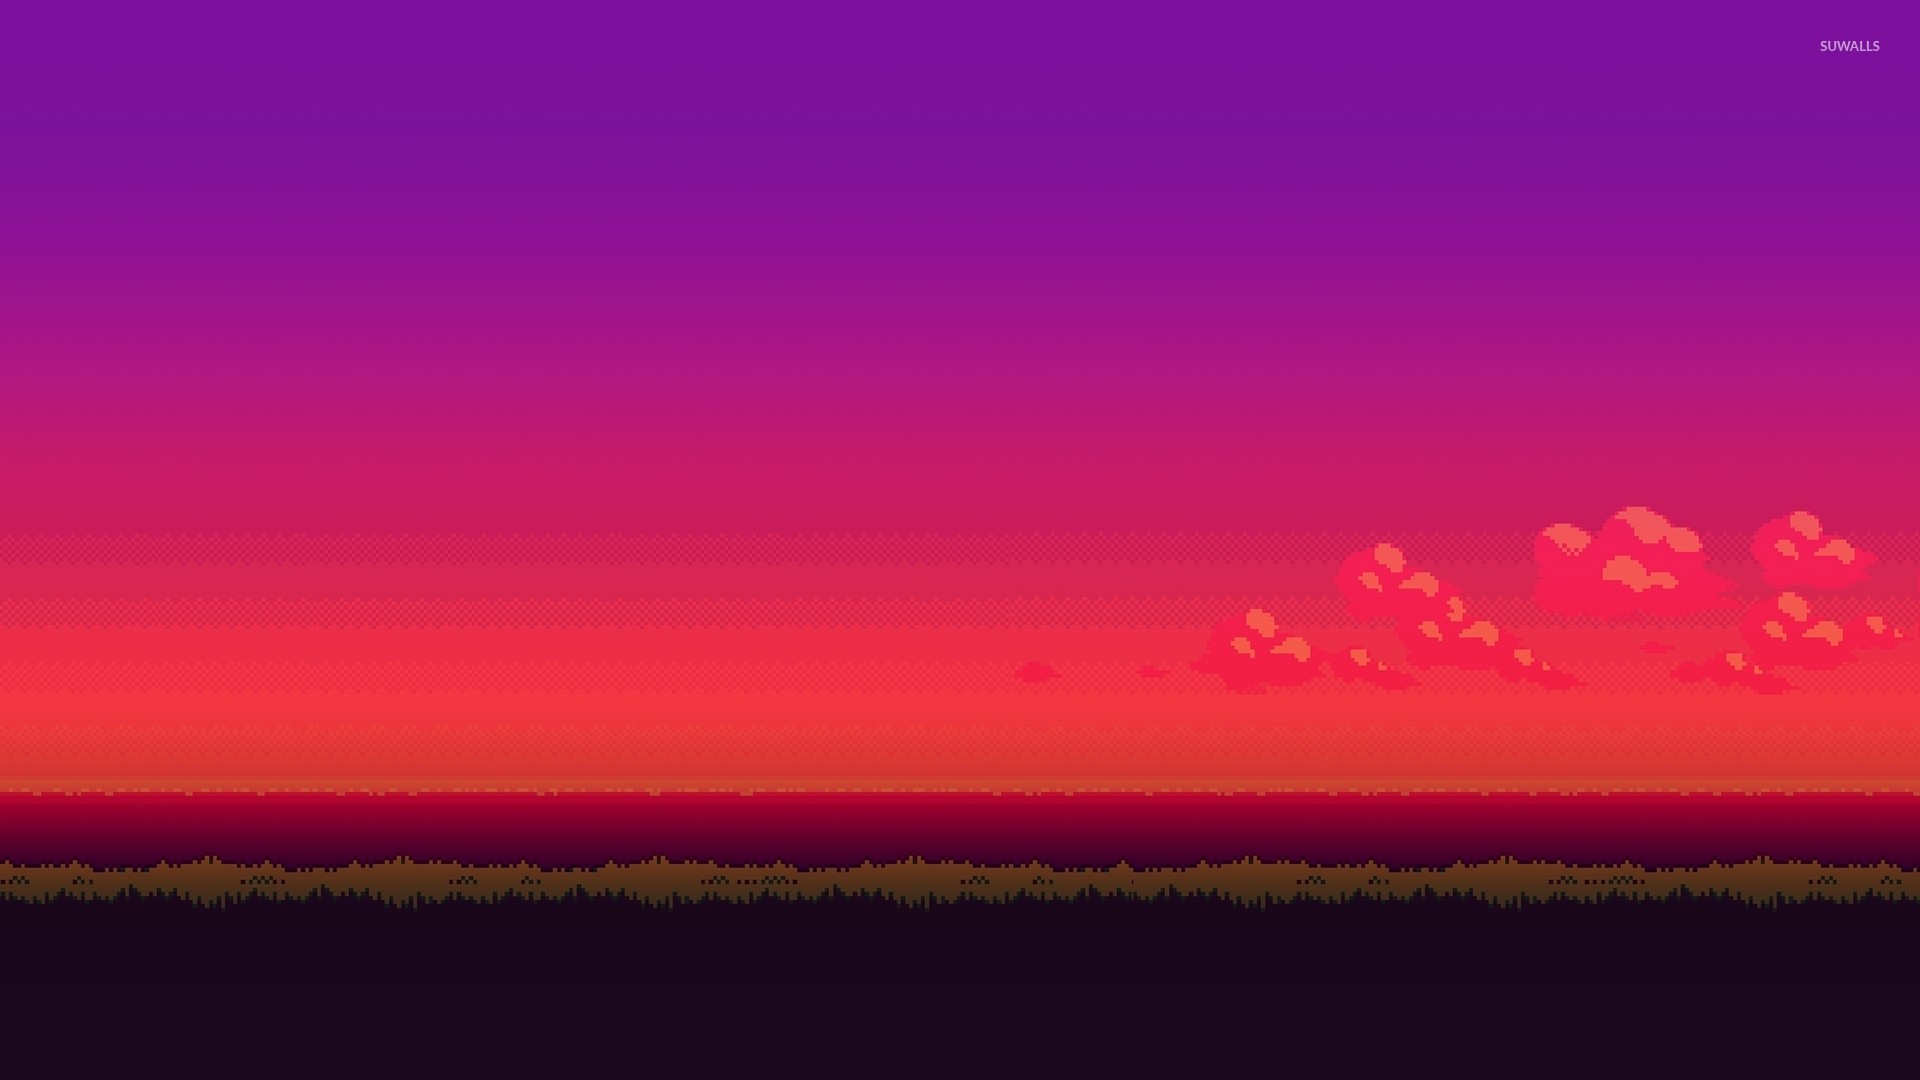 1920x1080 8-bit purple sunset wallpaper